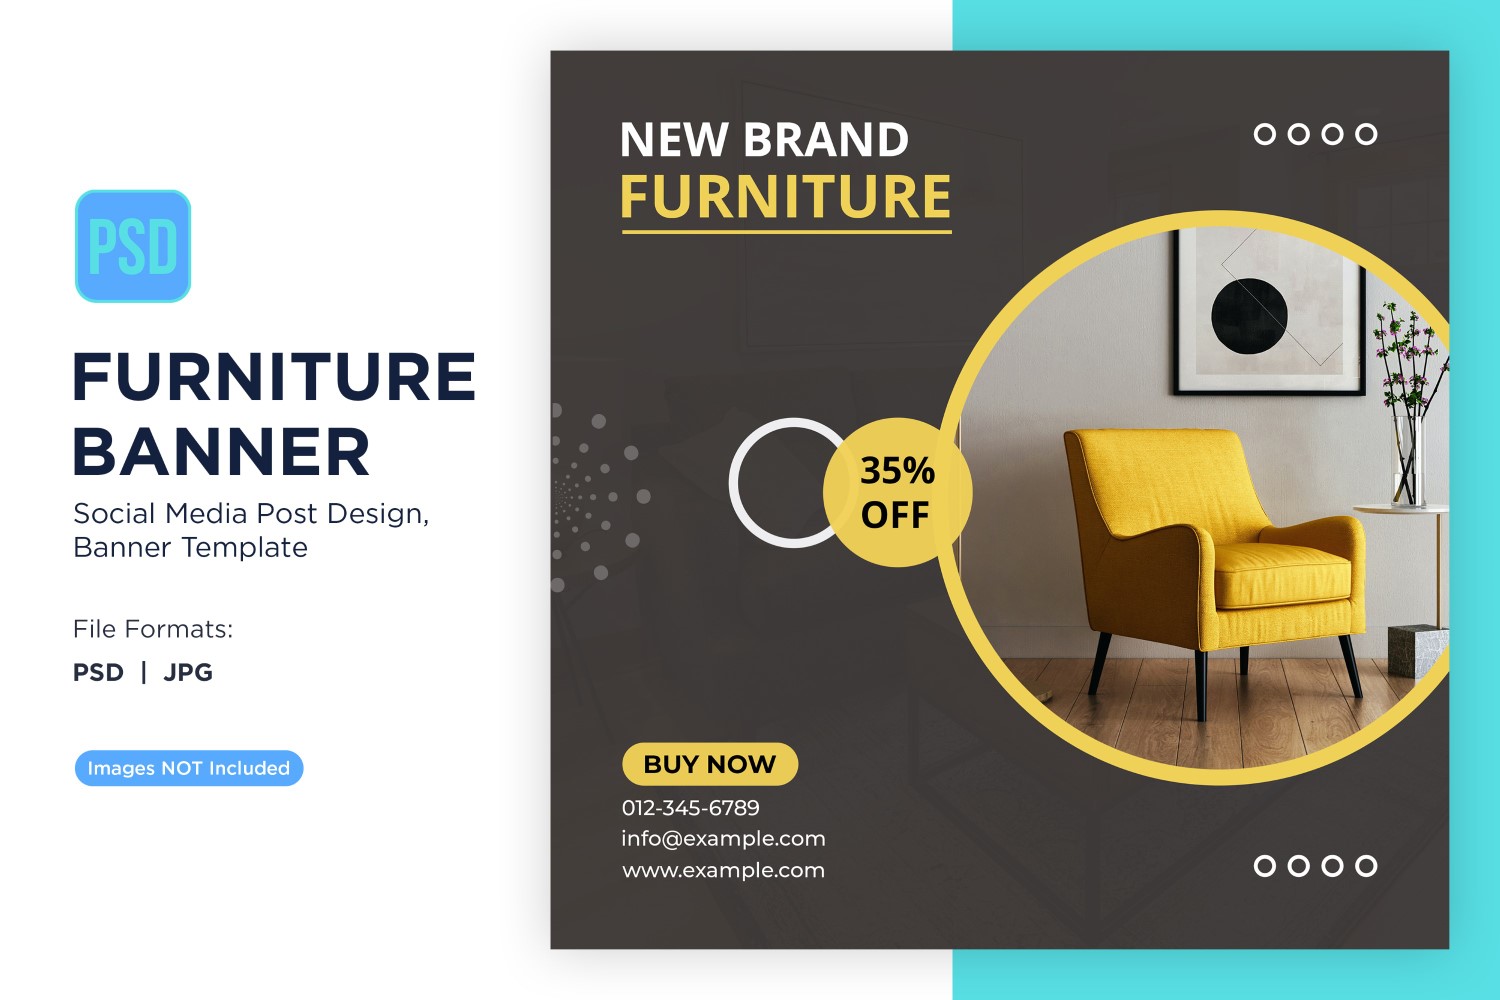 New Brand Furniture Banner Design Template 2